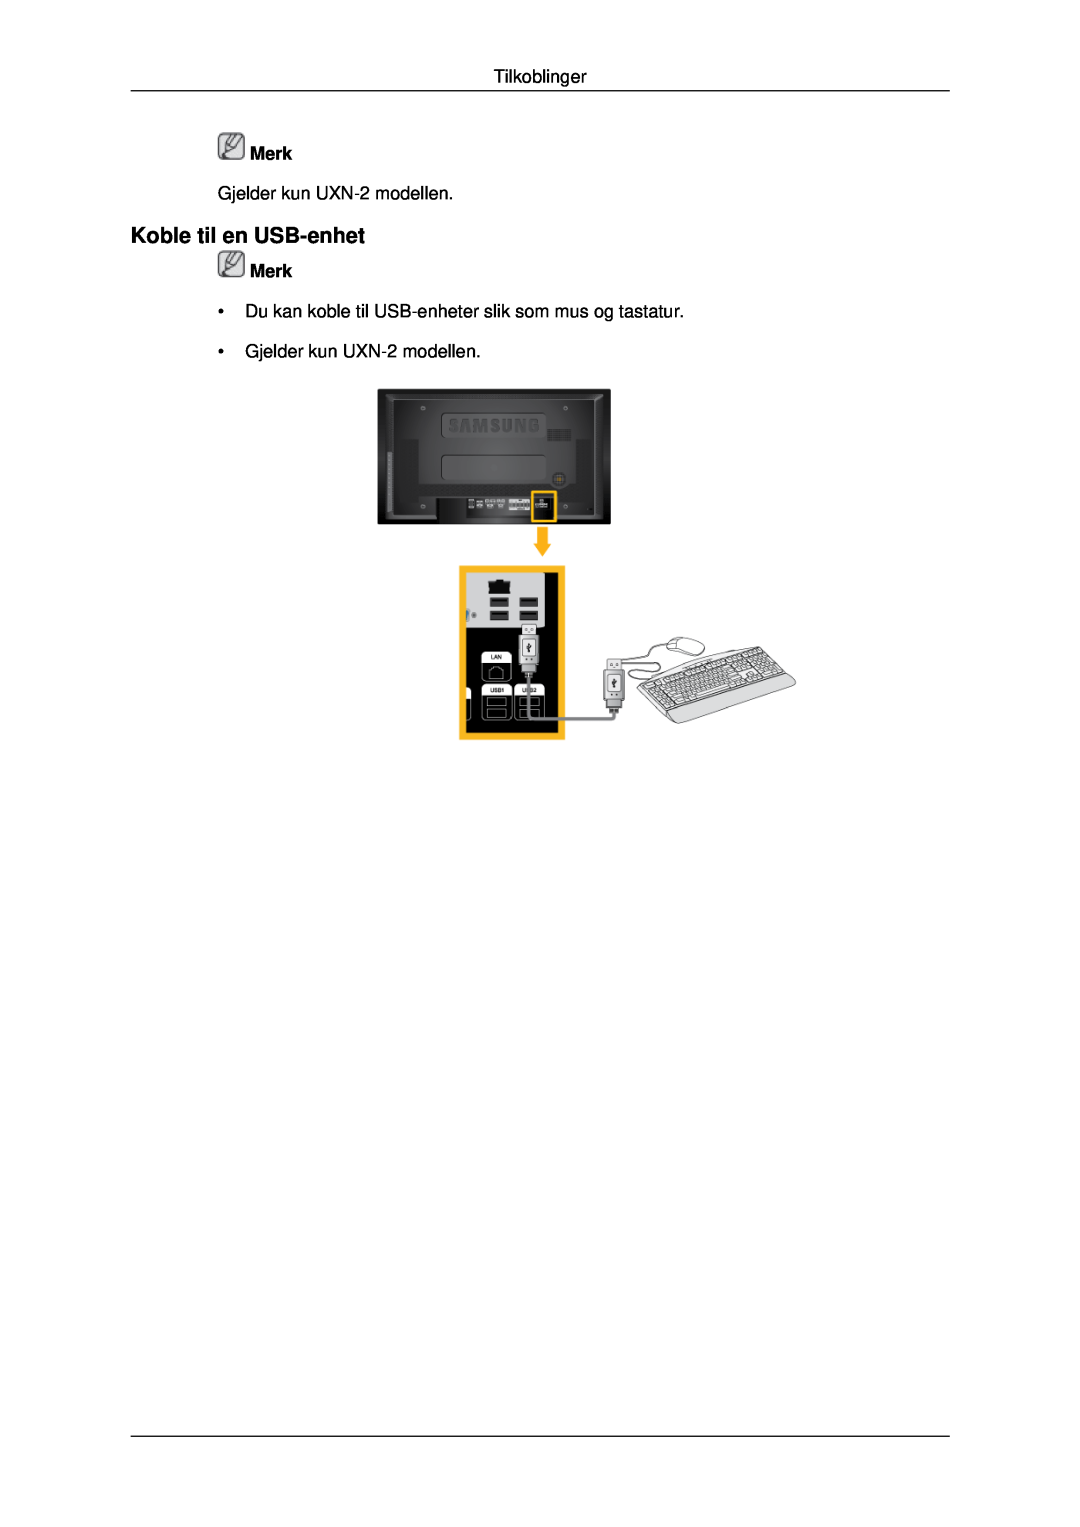 Samsung LH46MRPLBF/EN, LH40MRTLBC/EN, LH40MRPLBF/EN, LH46MRTLBC/EN, LH46MSTLBB/EN manual Koble til en USB-enhet, Merk 